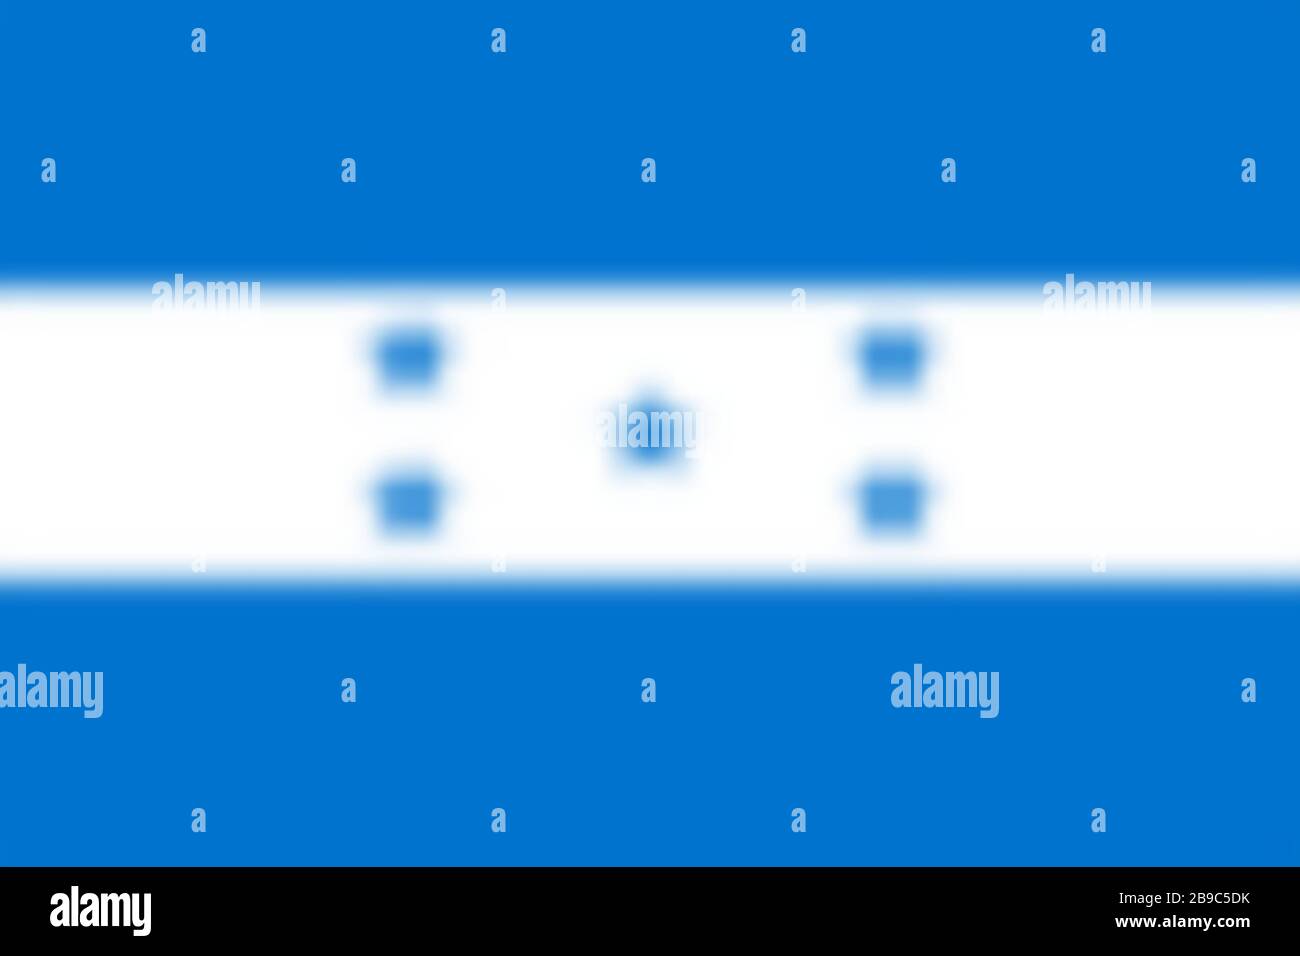 Blurred background with flag Honduras. Vector illustration Stock Vector